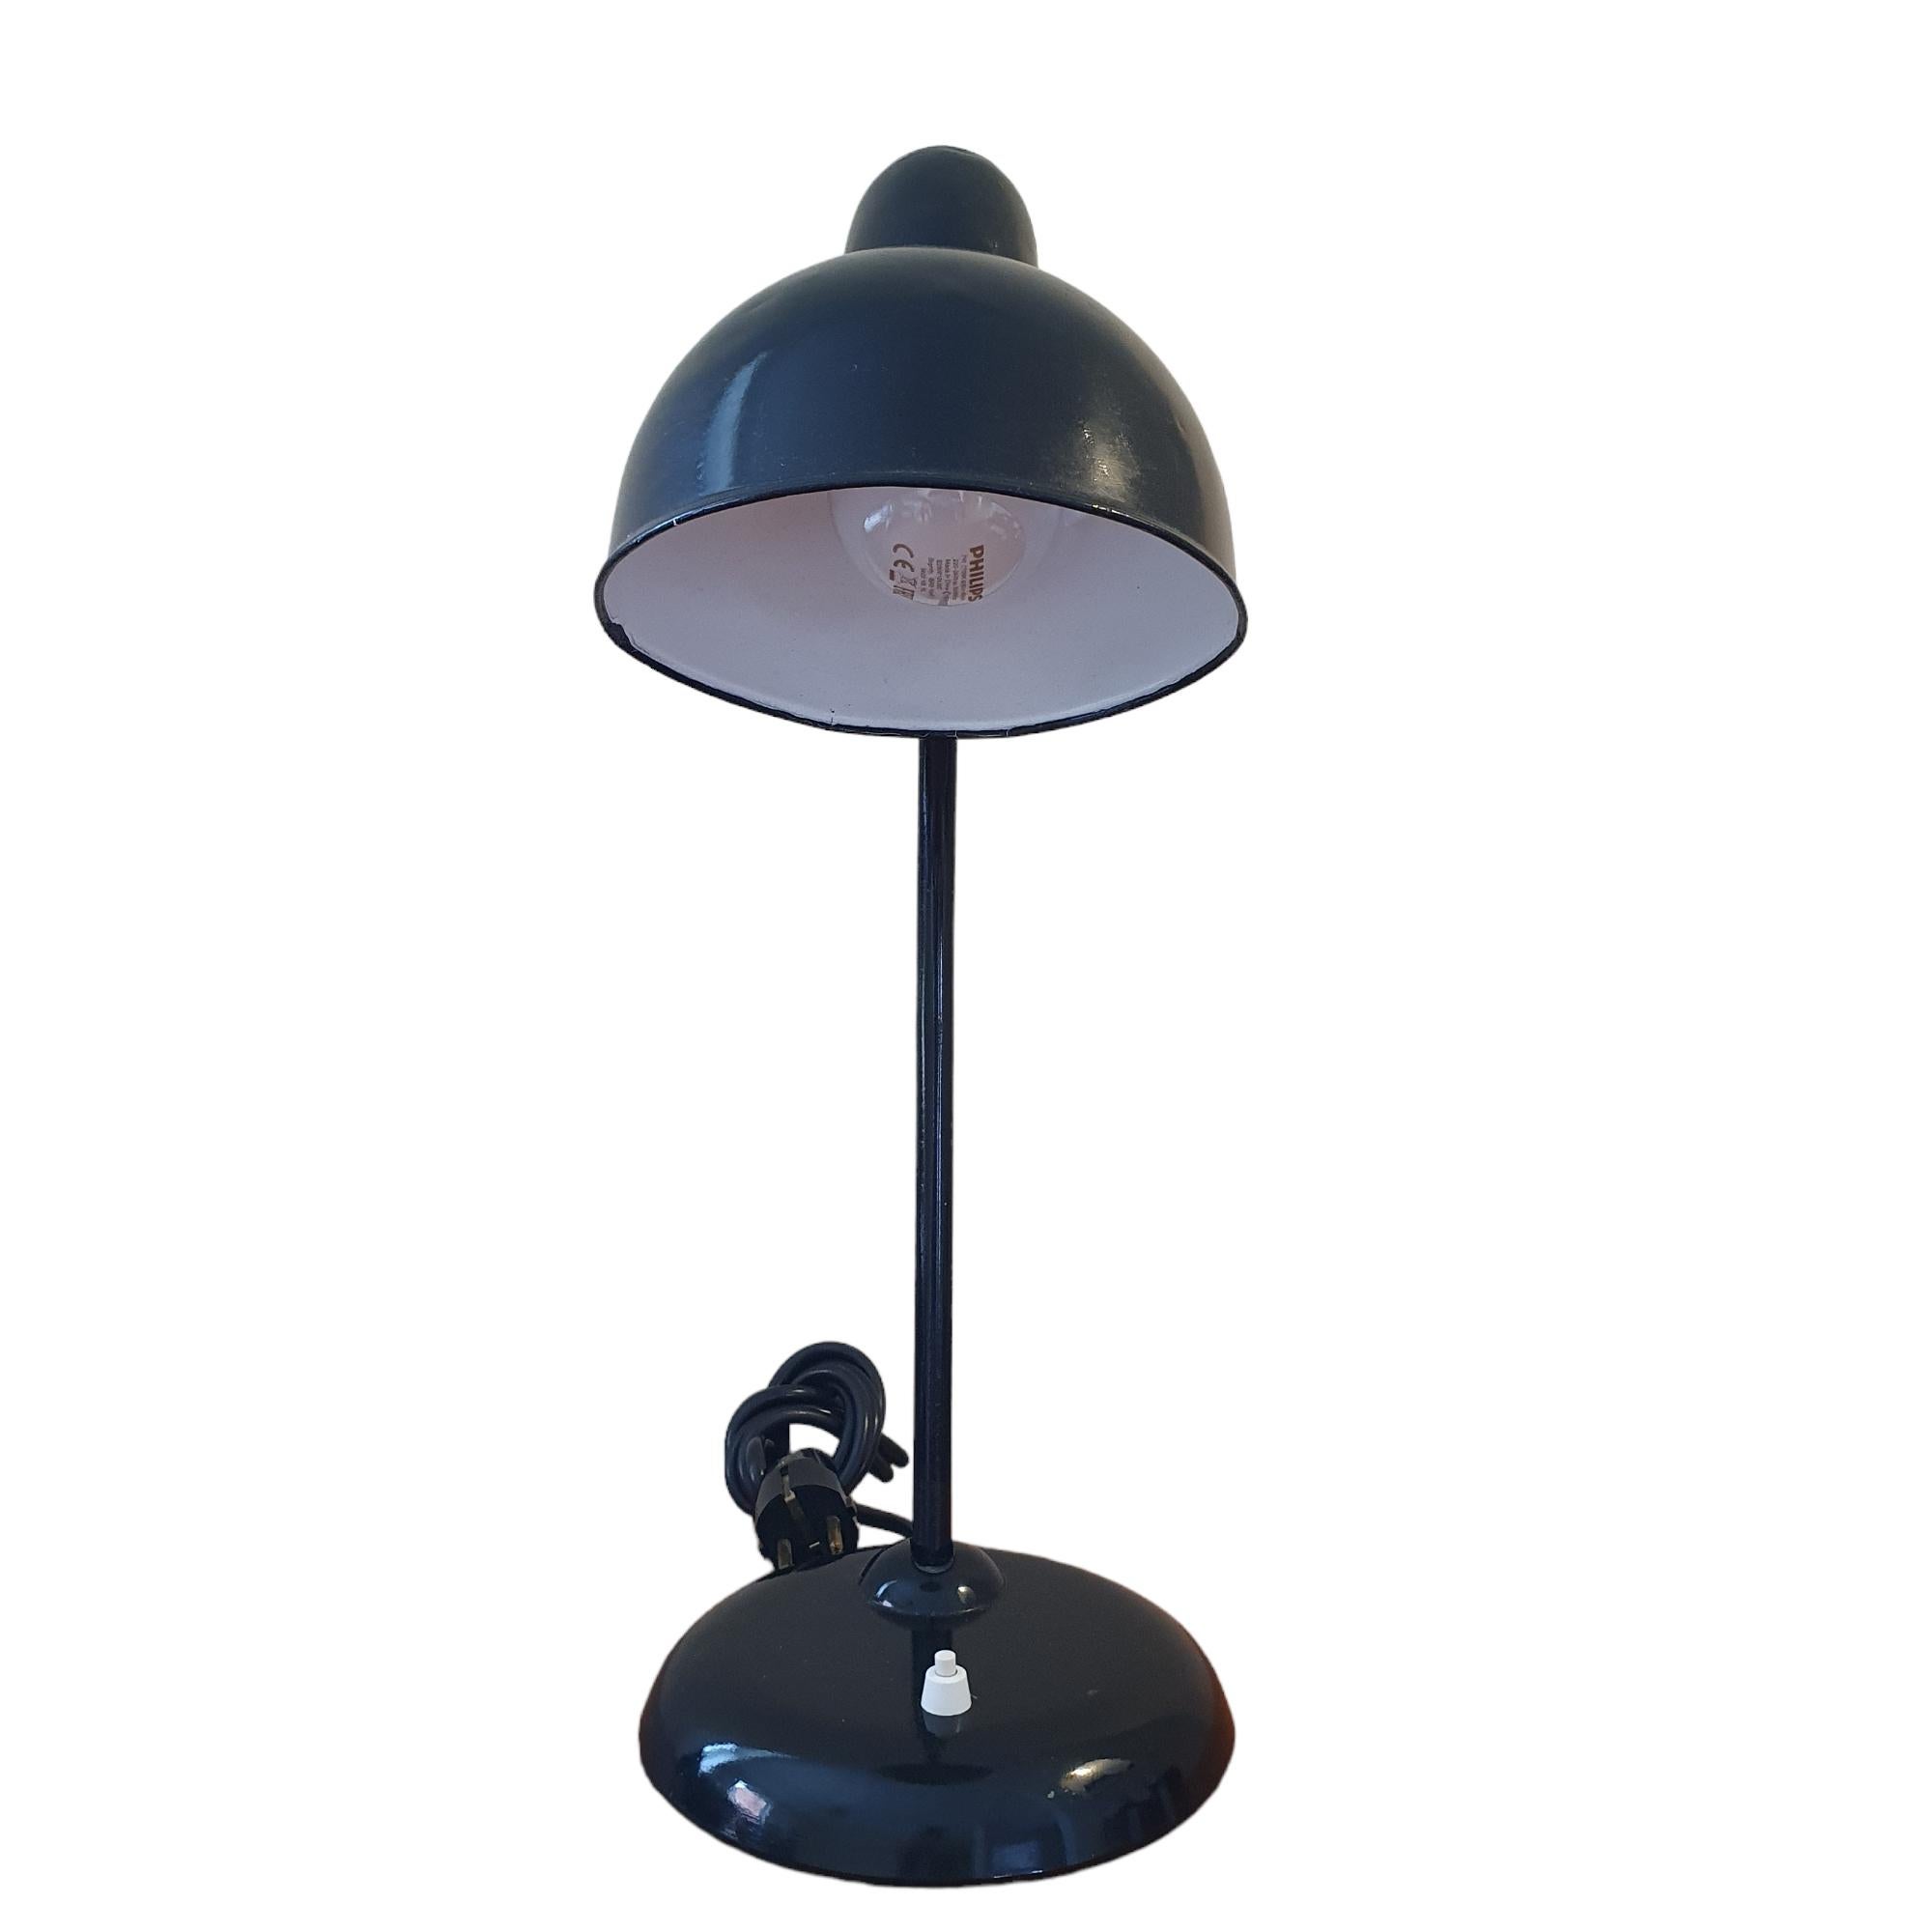 Bauhaus Original 1930's Black Kaiser Dell Table Lamp, model no. 6556 For Sale